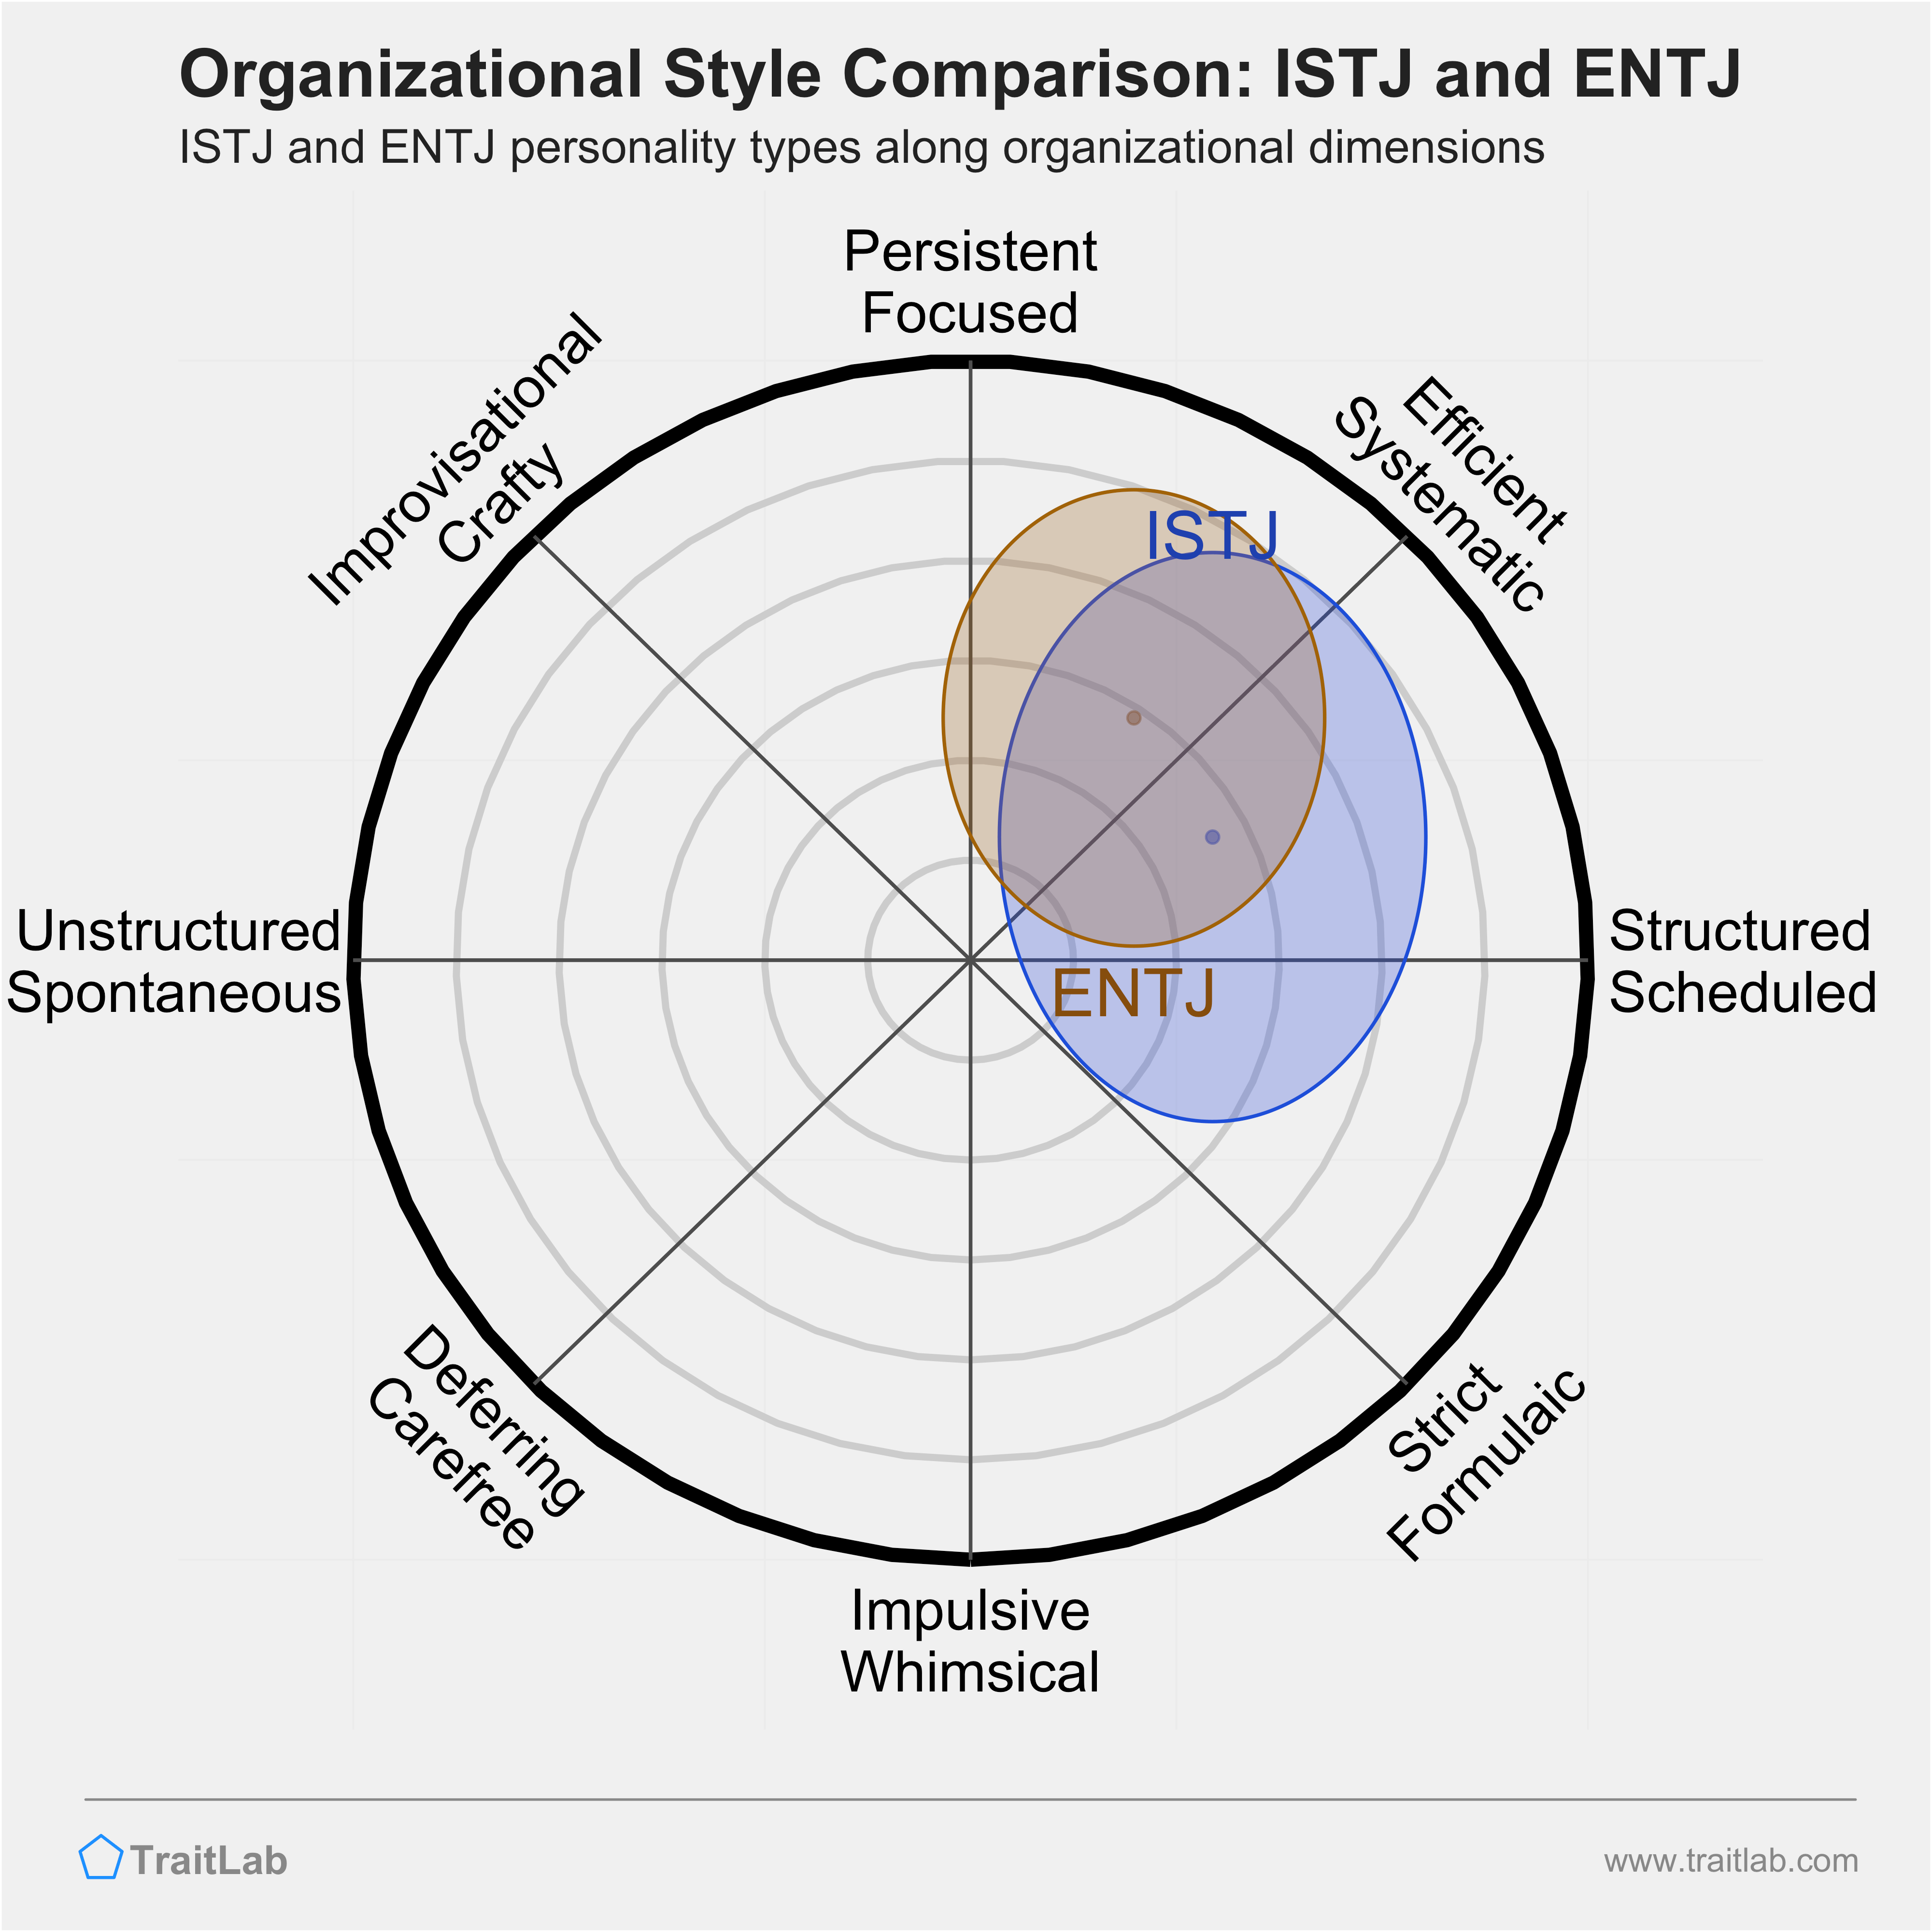 ISTJ and ENTJ comparison across organizational dimensions